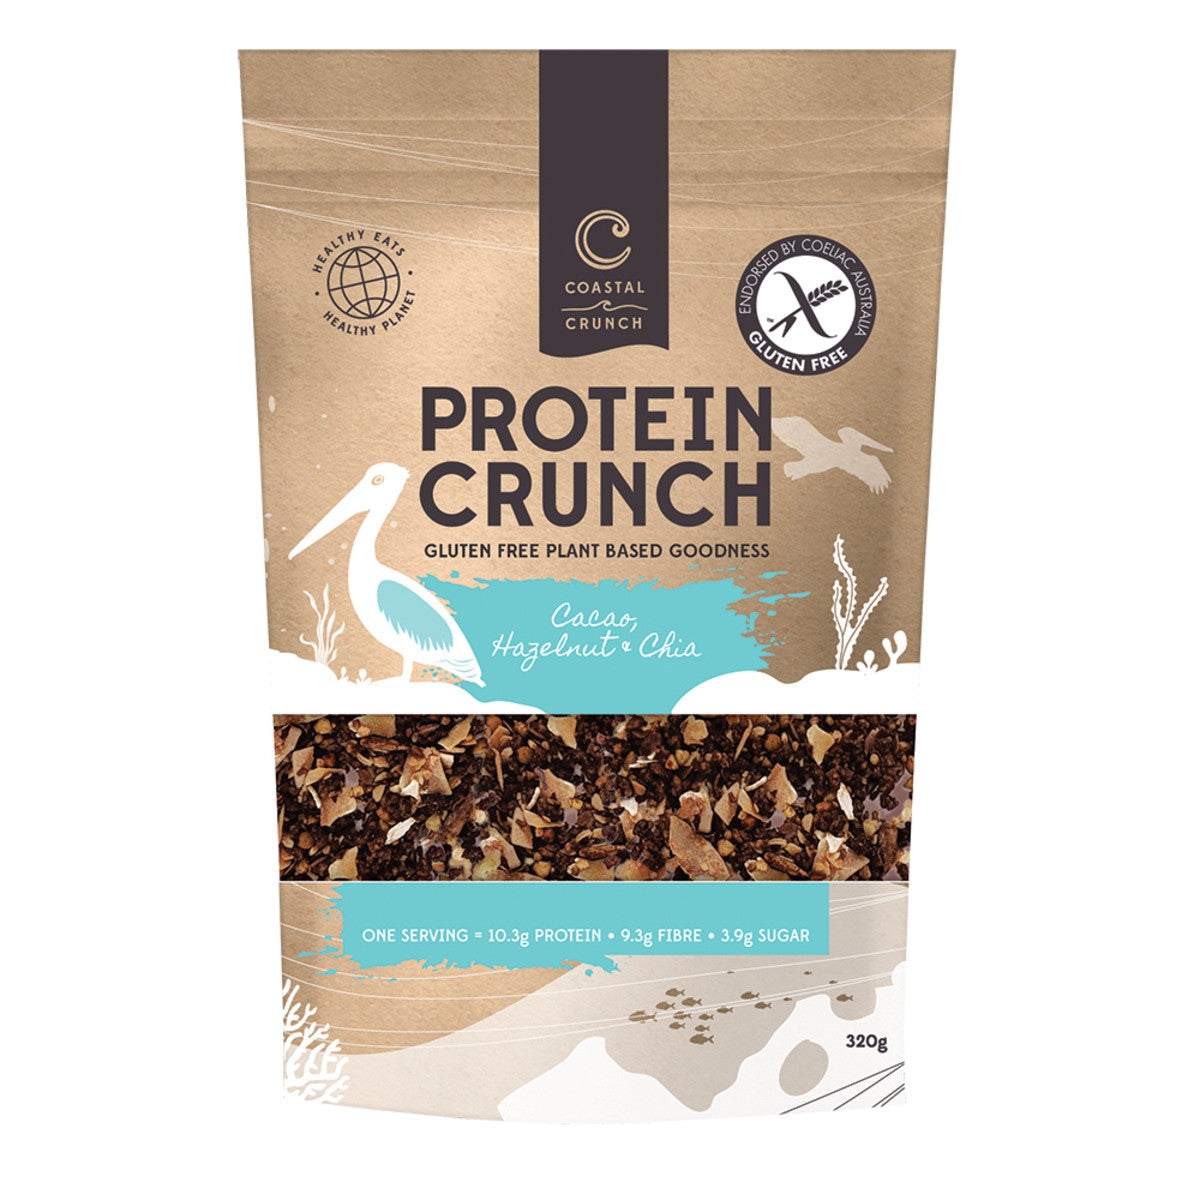 Coastal Crunch - Protein Crunch Cacao, Hazelnut and Chia